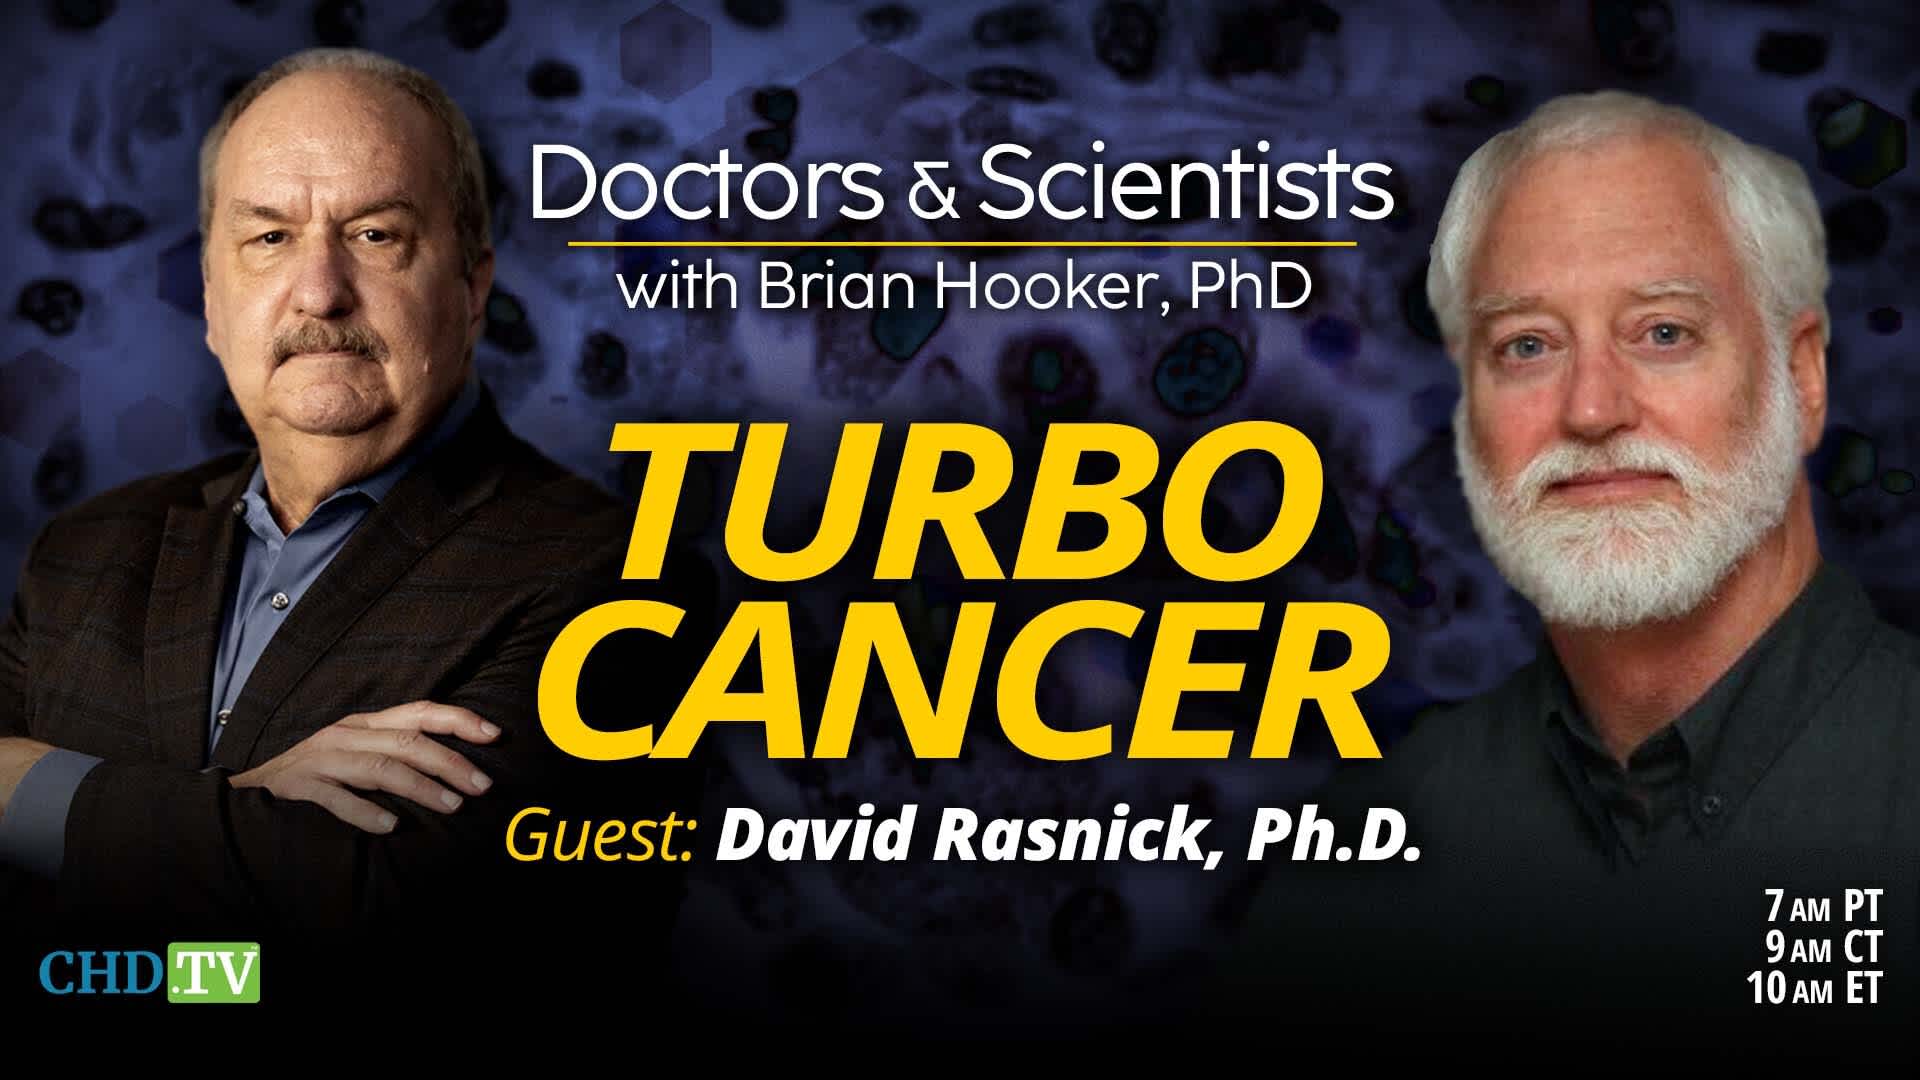 Turbo Cancer: Keys to Understanding With David Rasnick, Ph.D.